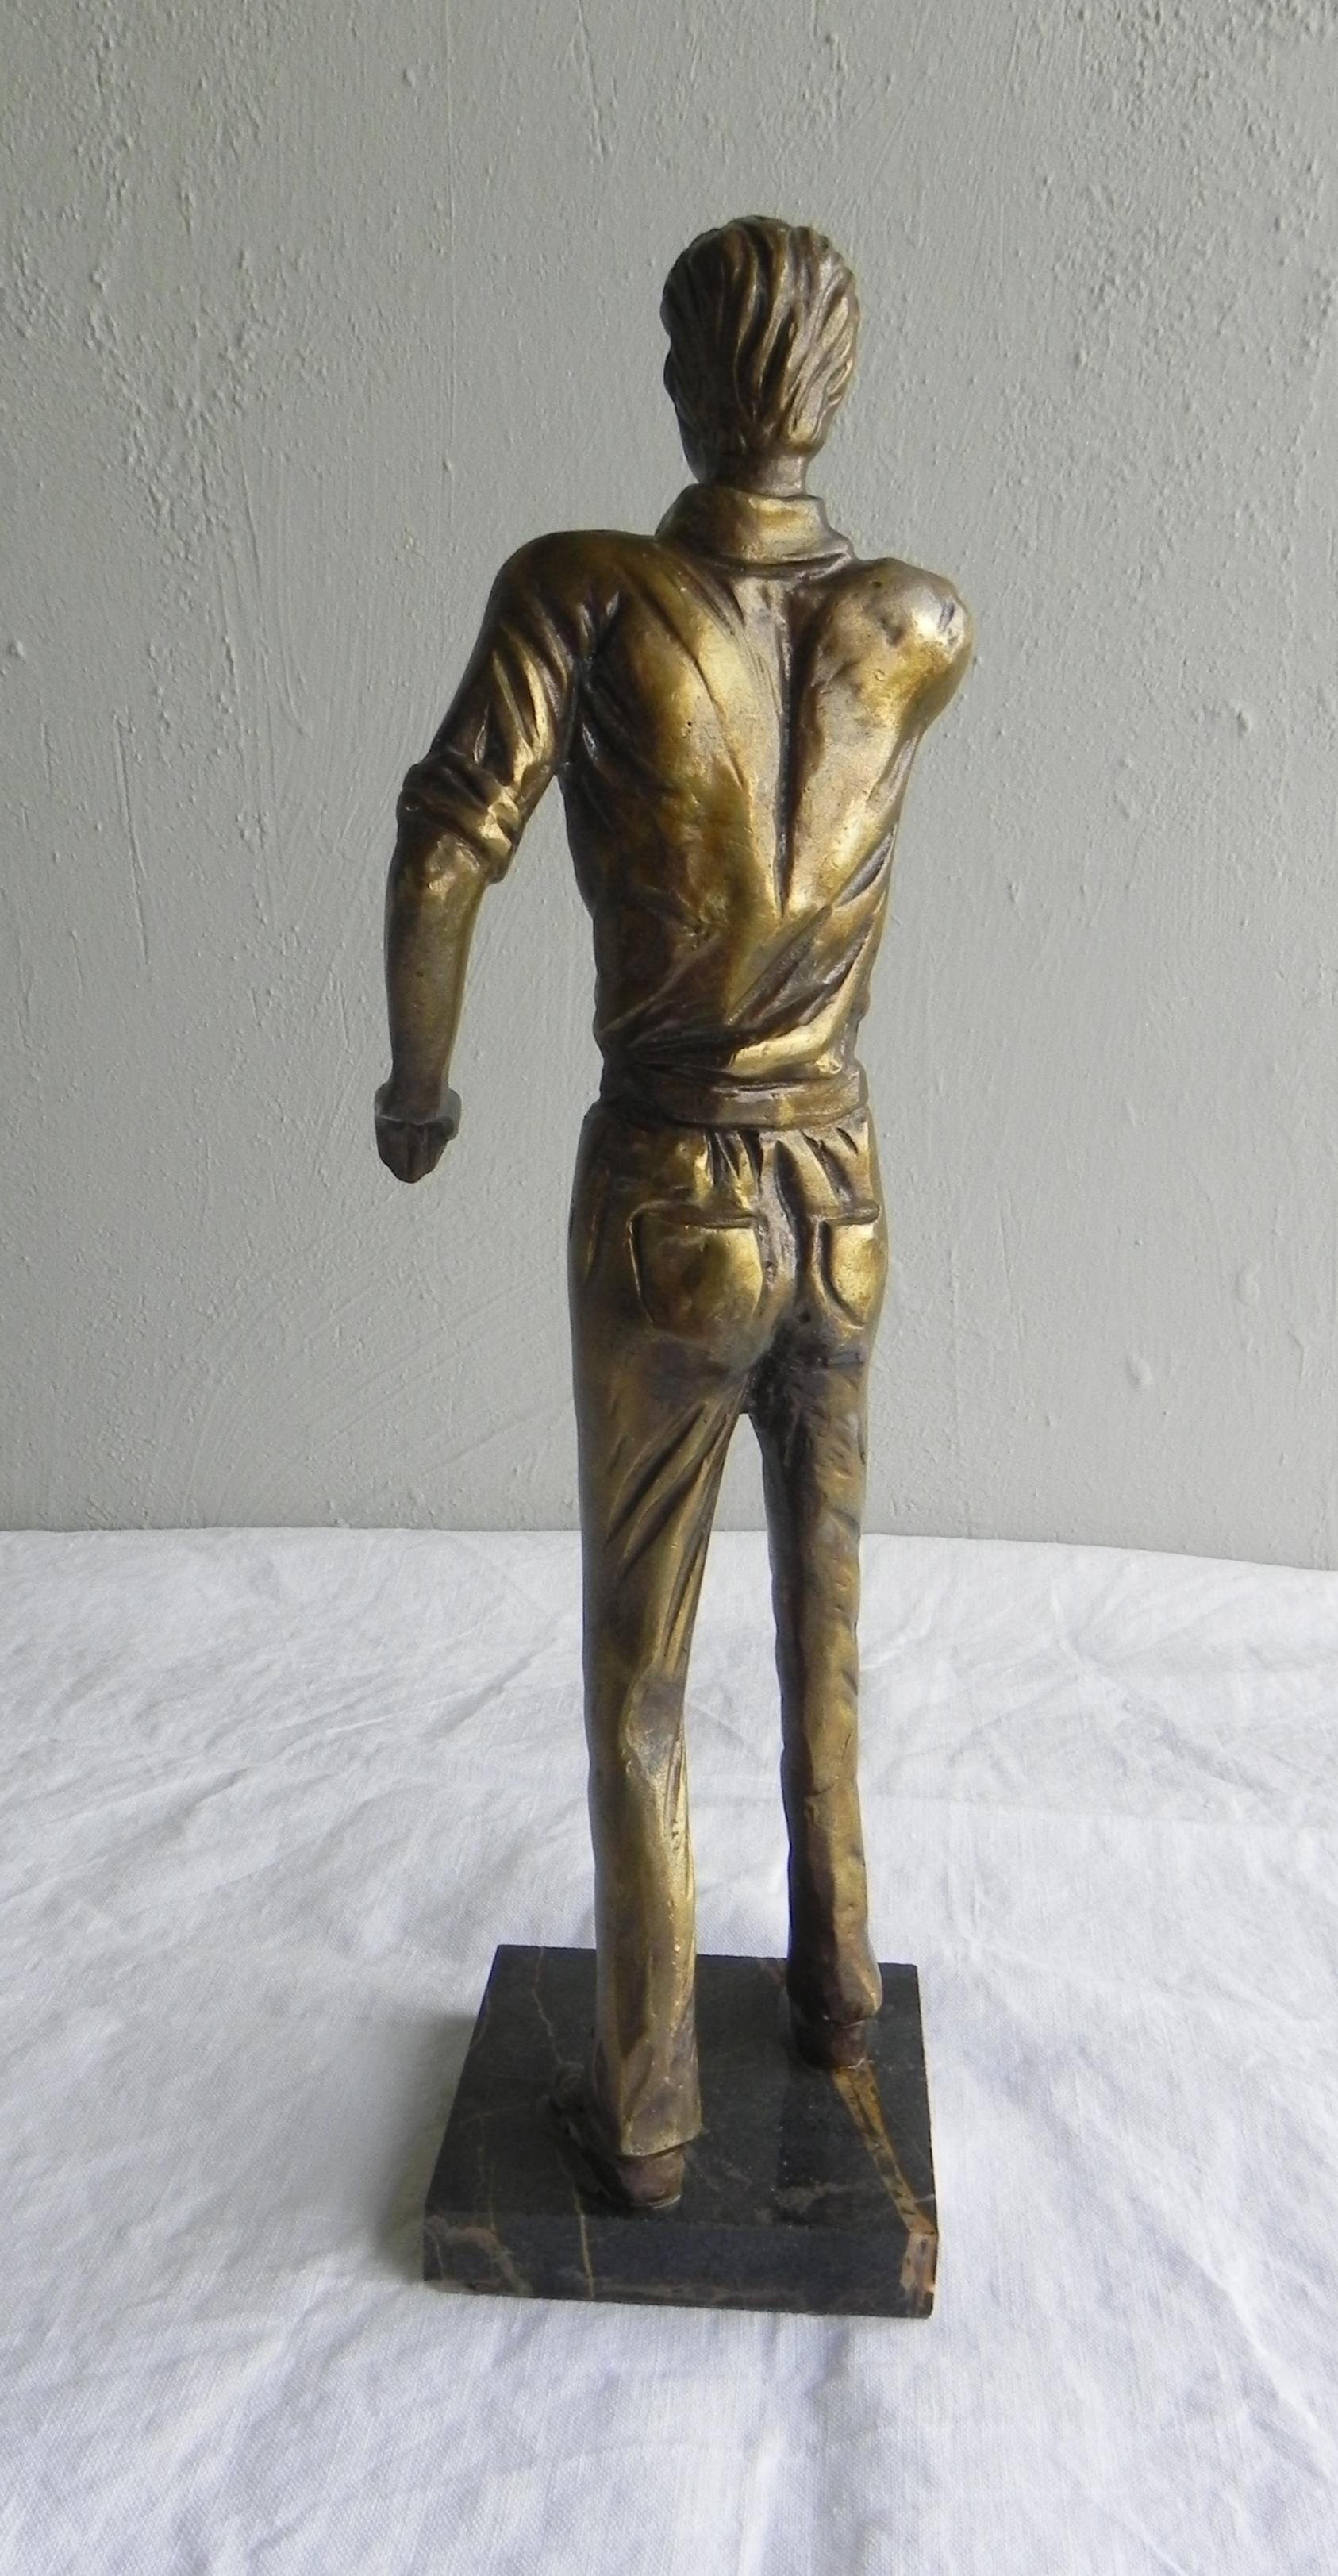 Cast bronze sculpture, 